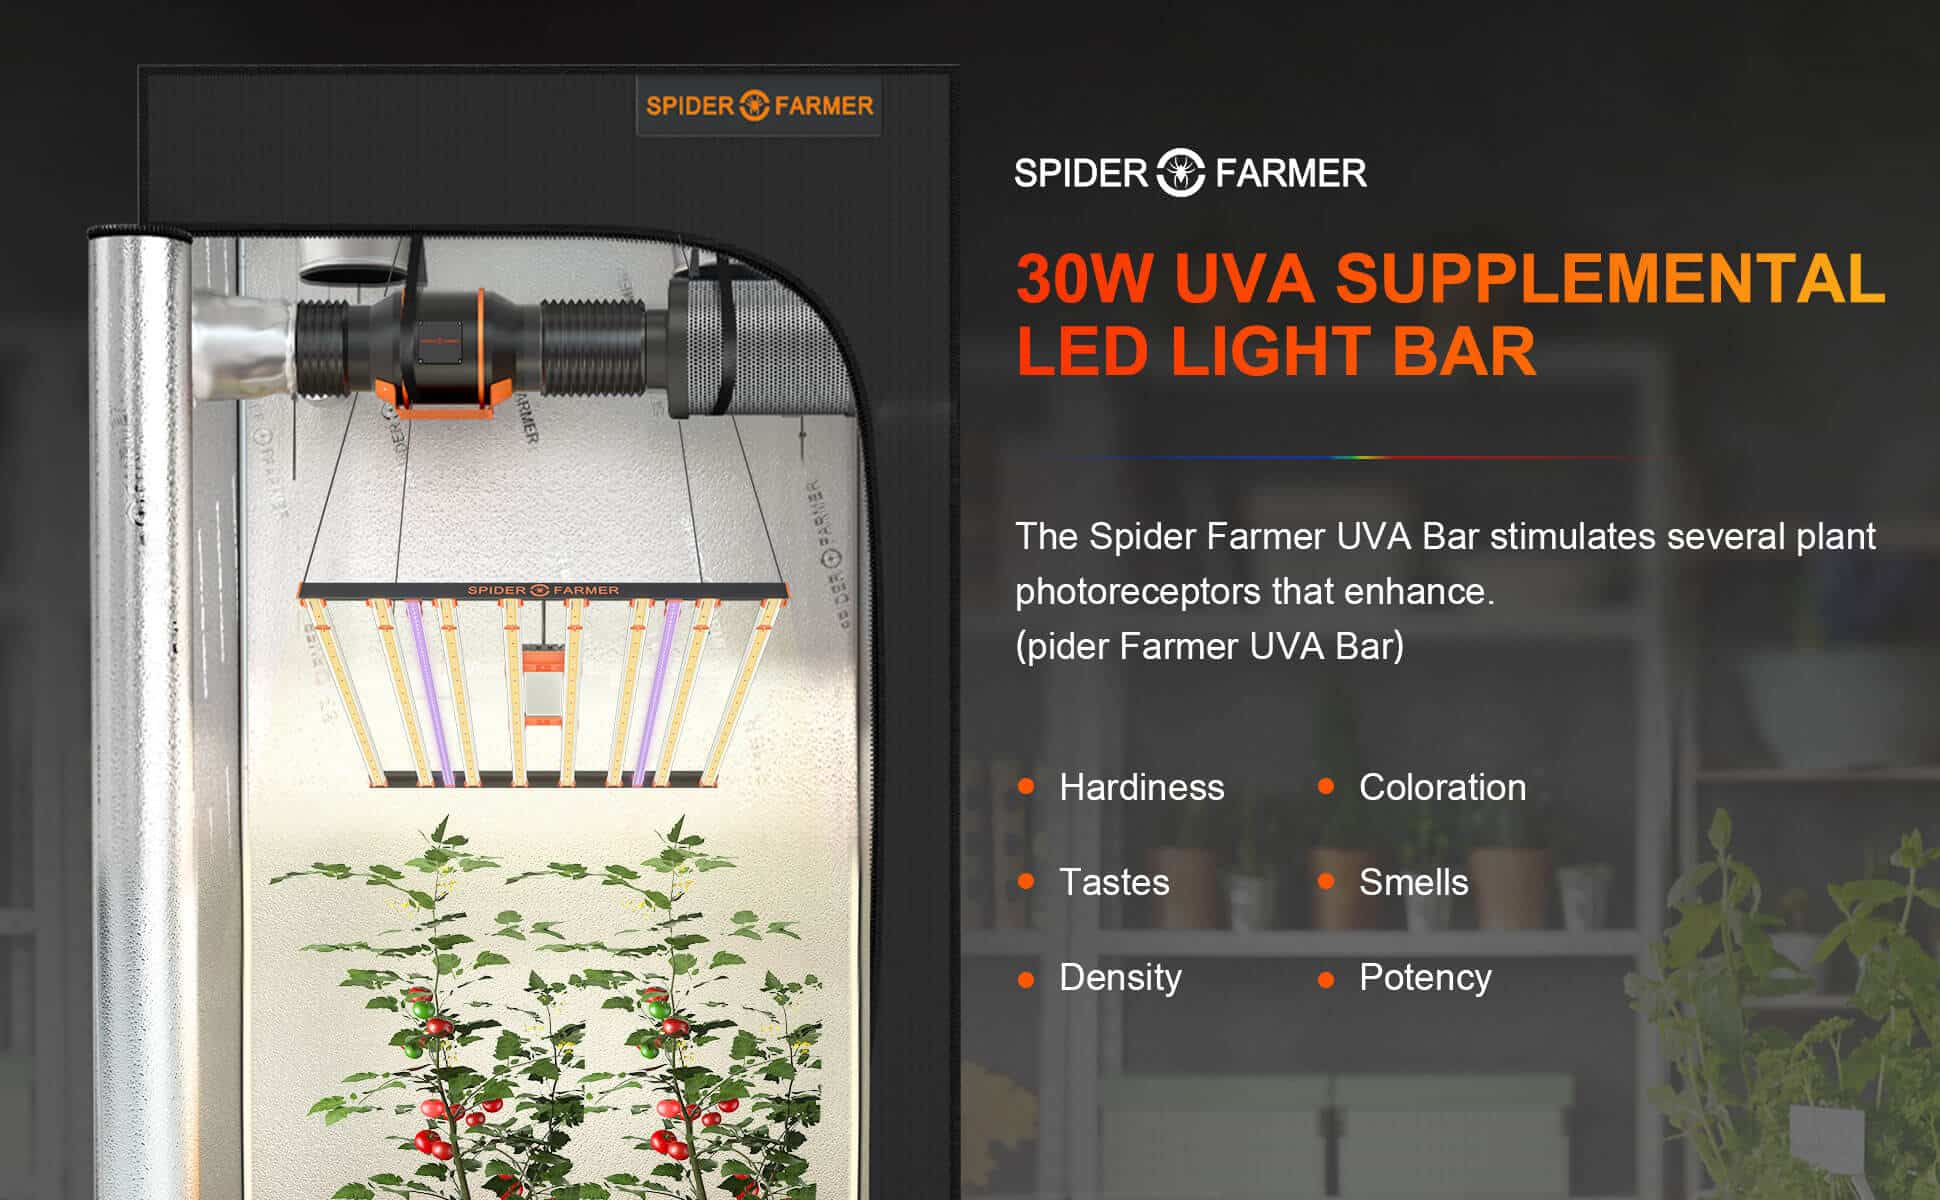 Using grow share of UV 30W LED